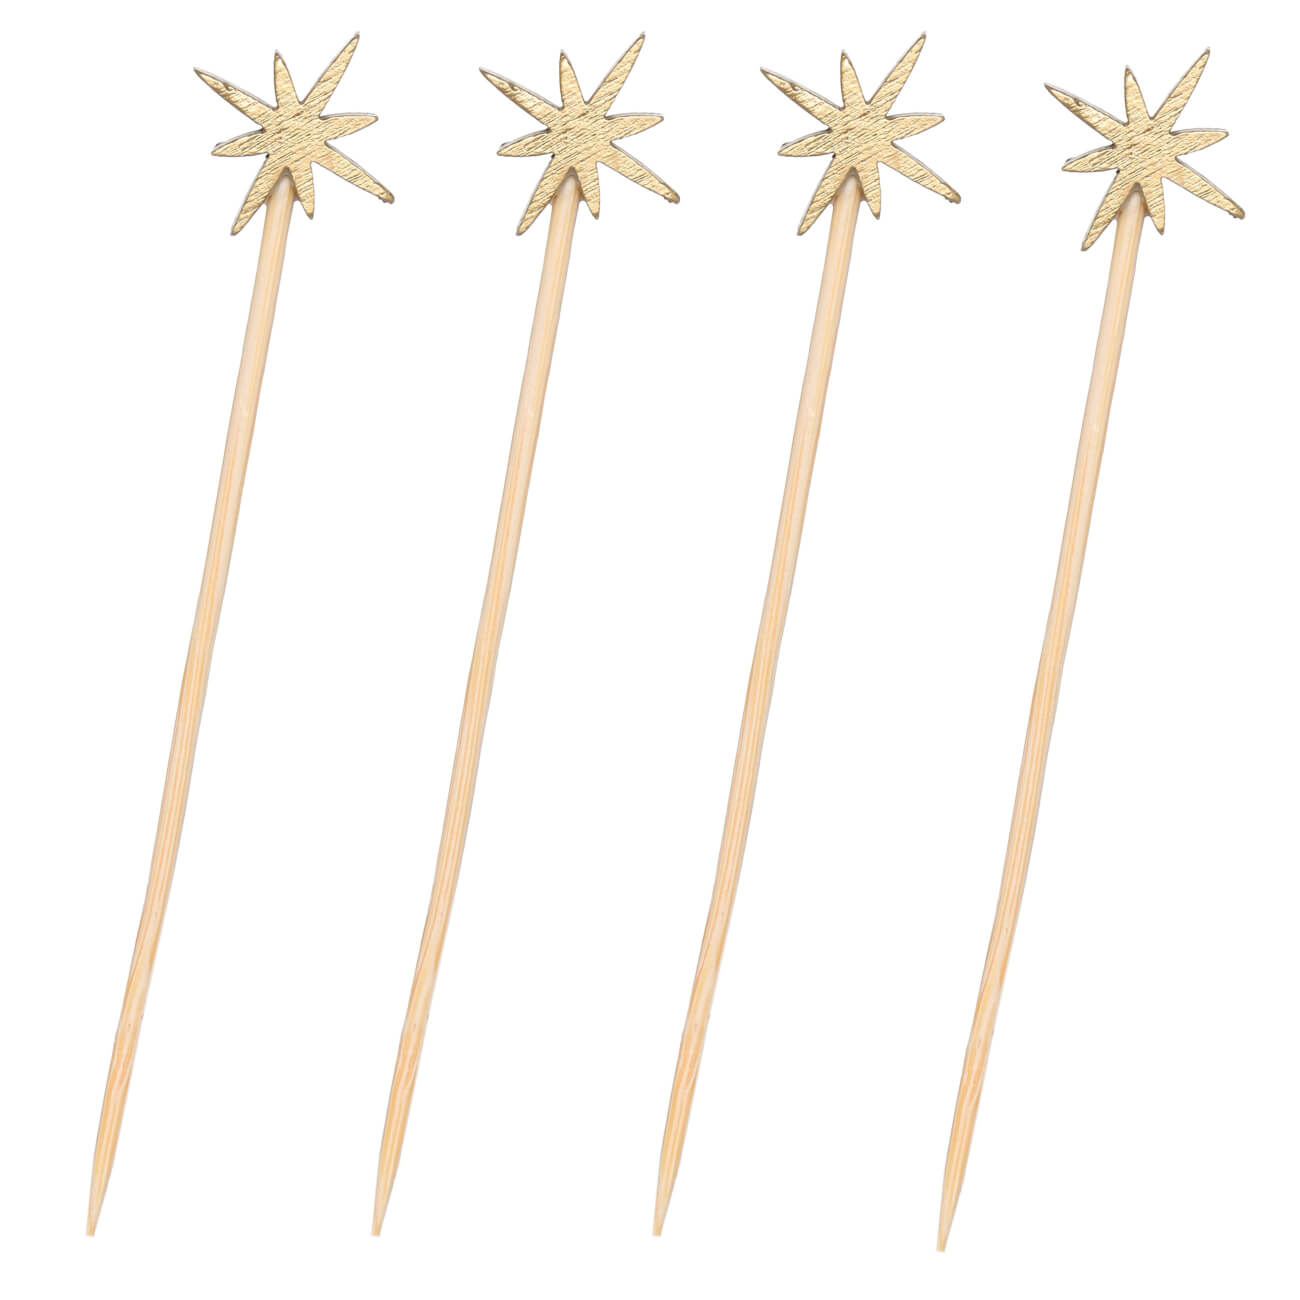 Шпажка для канапе, 9 см, 20 шт, бамбук, золотистая, Звезда, Elegant details шпажки для канапе boomzee